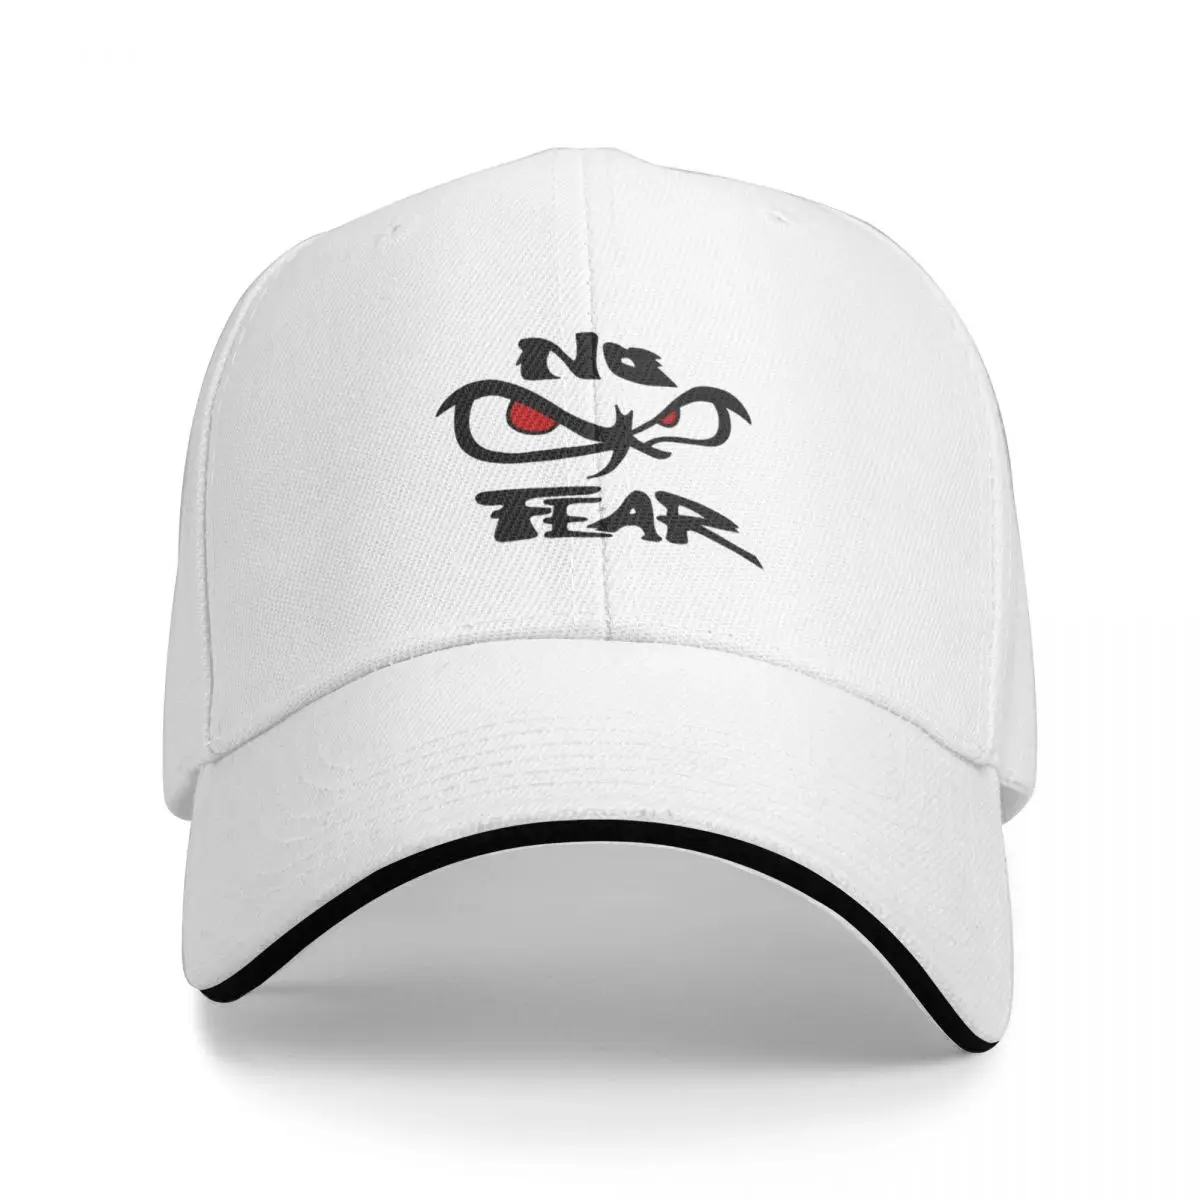 Best Seller No Fear Brand Cap Casual Baseball Caps Adjustable Hat Hip Hop Summer Unisex Baseball Hats Customizable Polychromatic